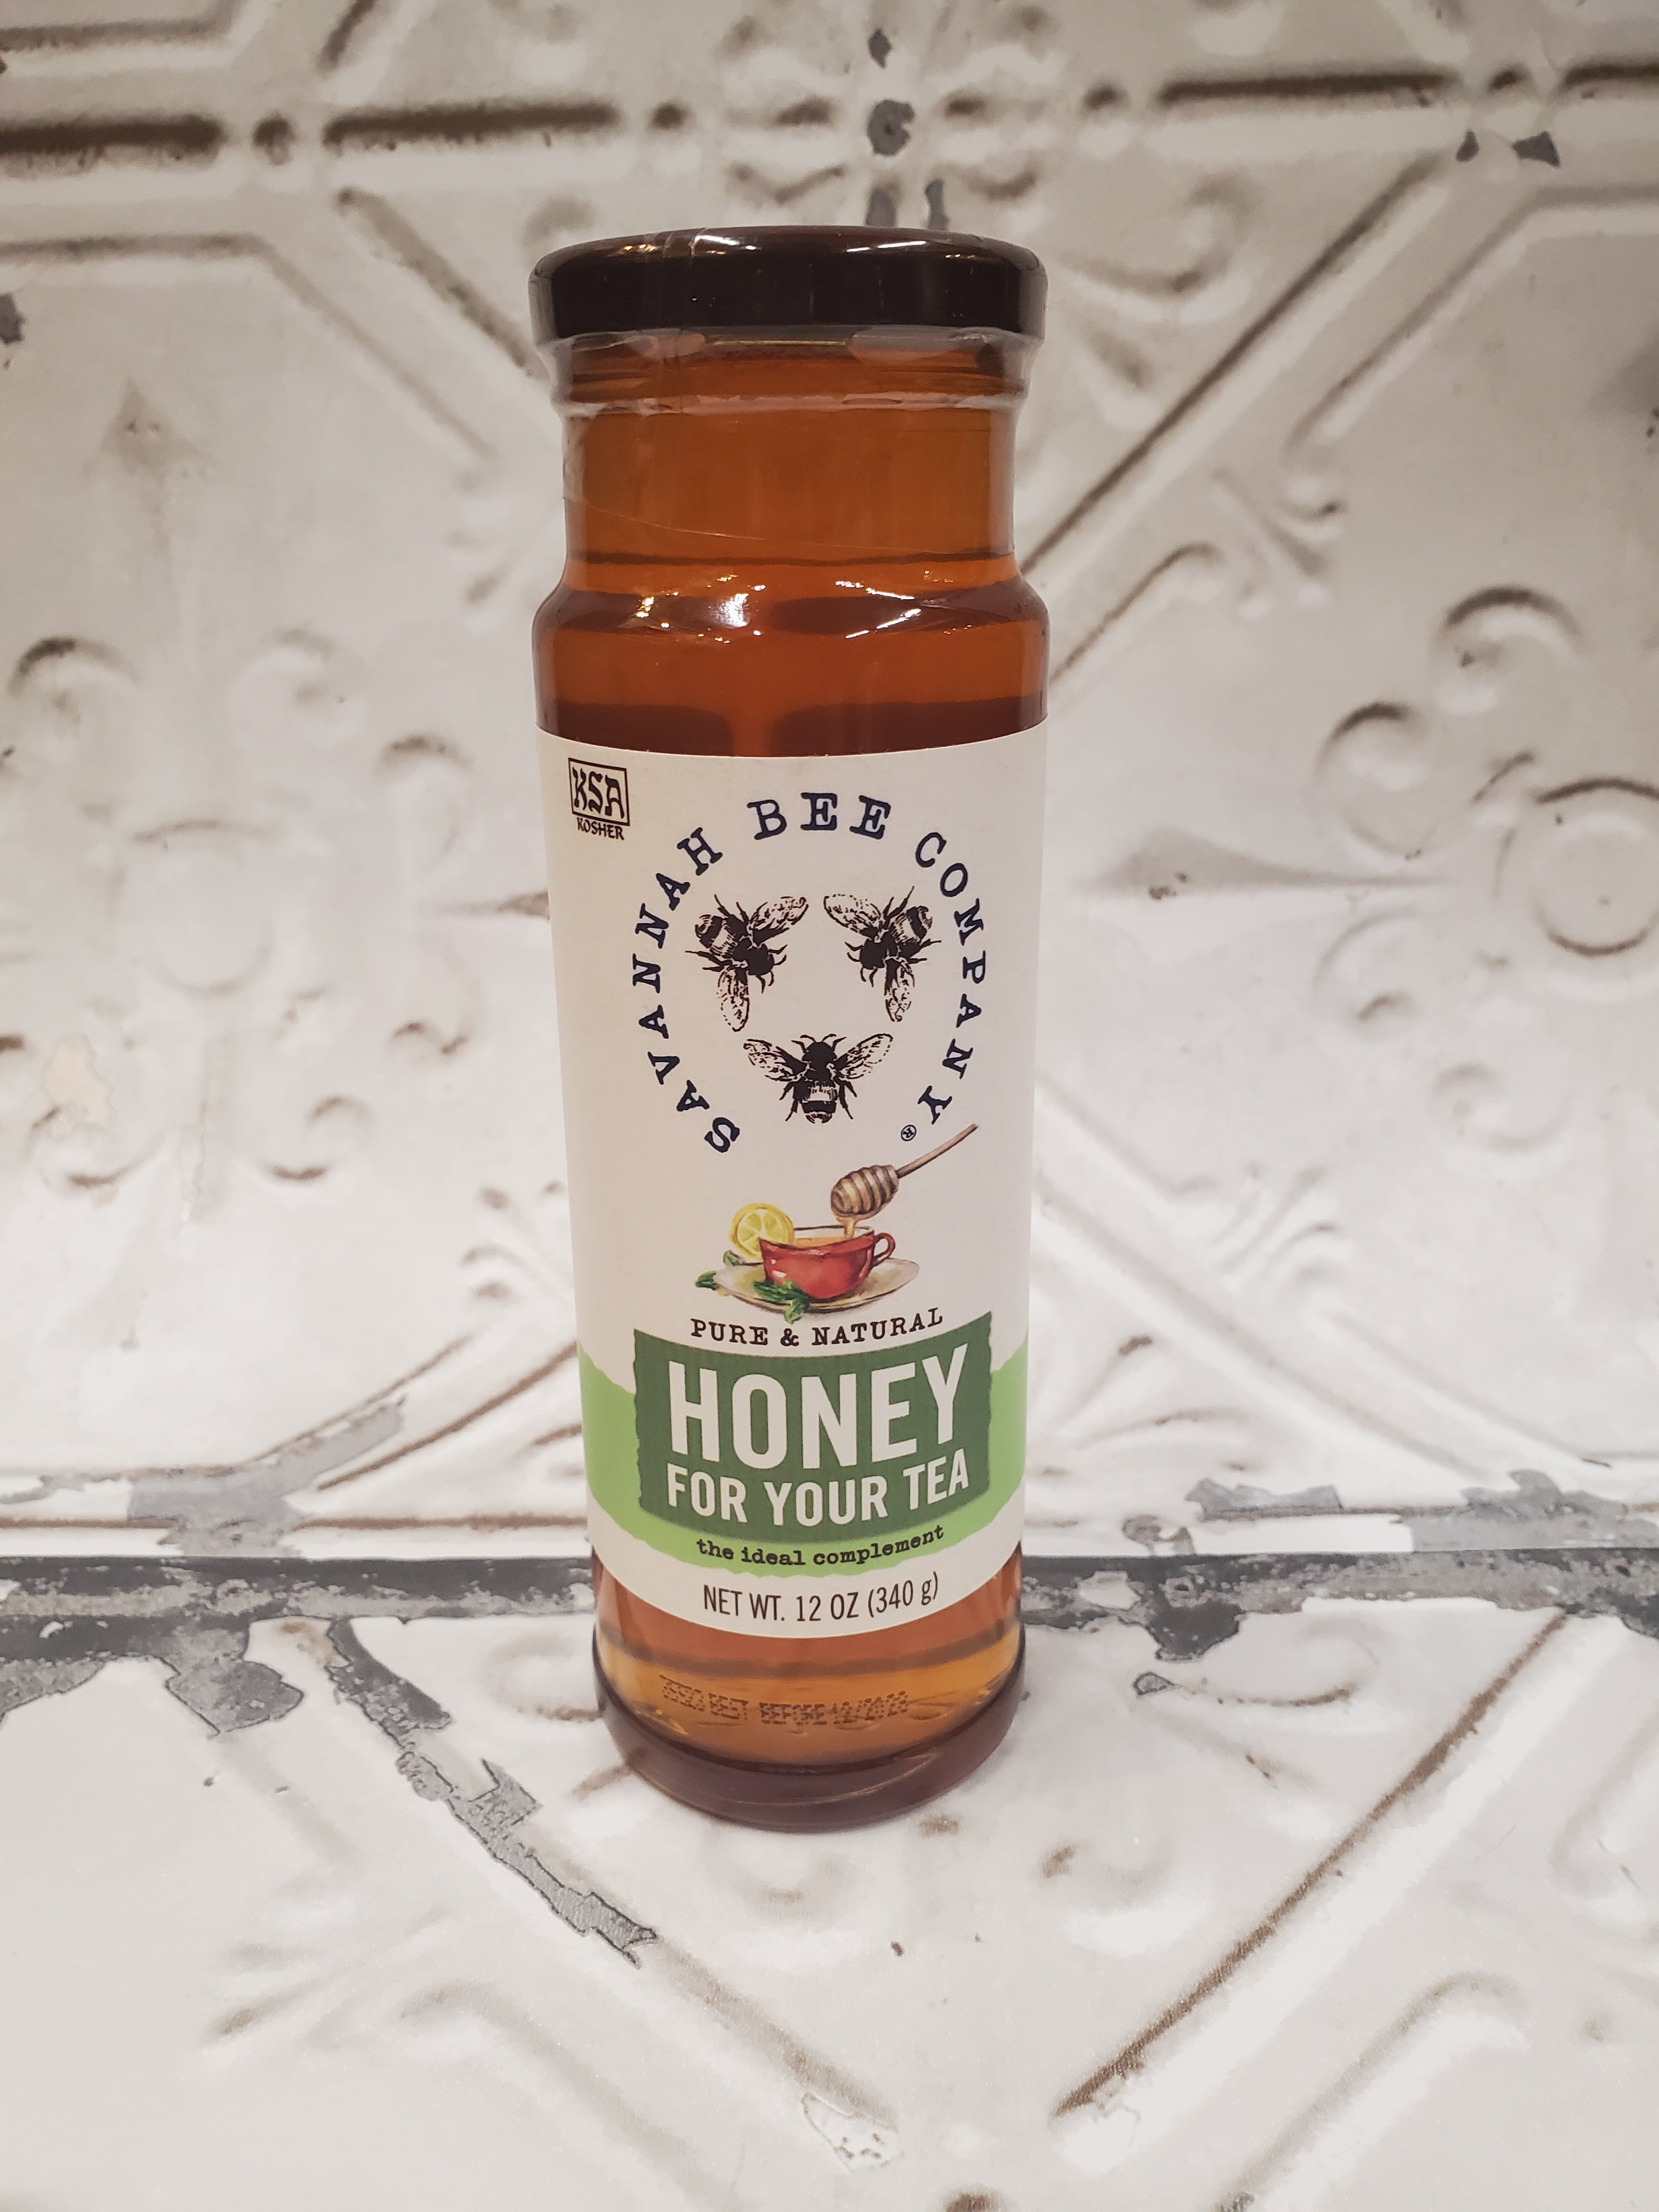 Savannah Bee Company Honey for your Tea - Olive Oil Etcetera 